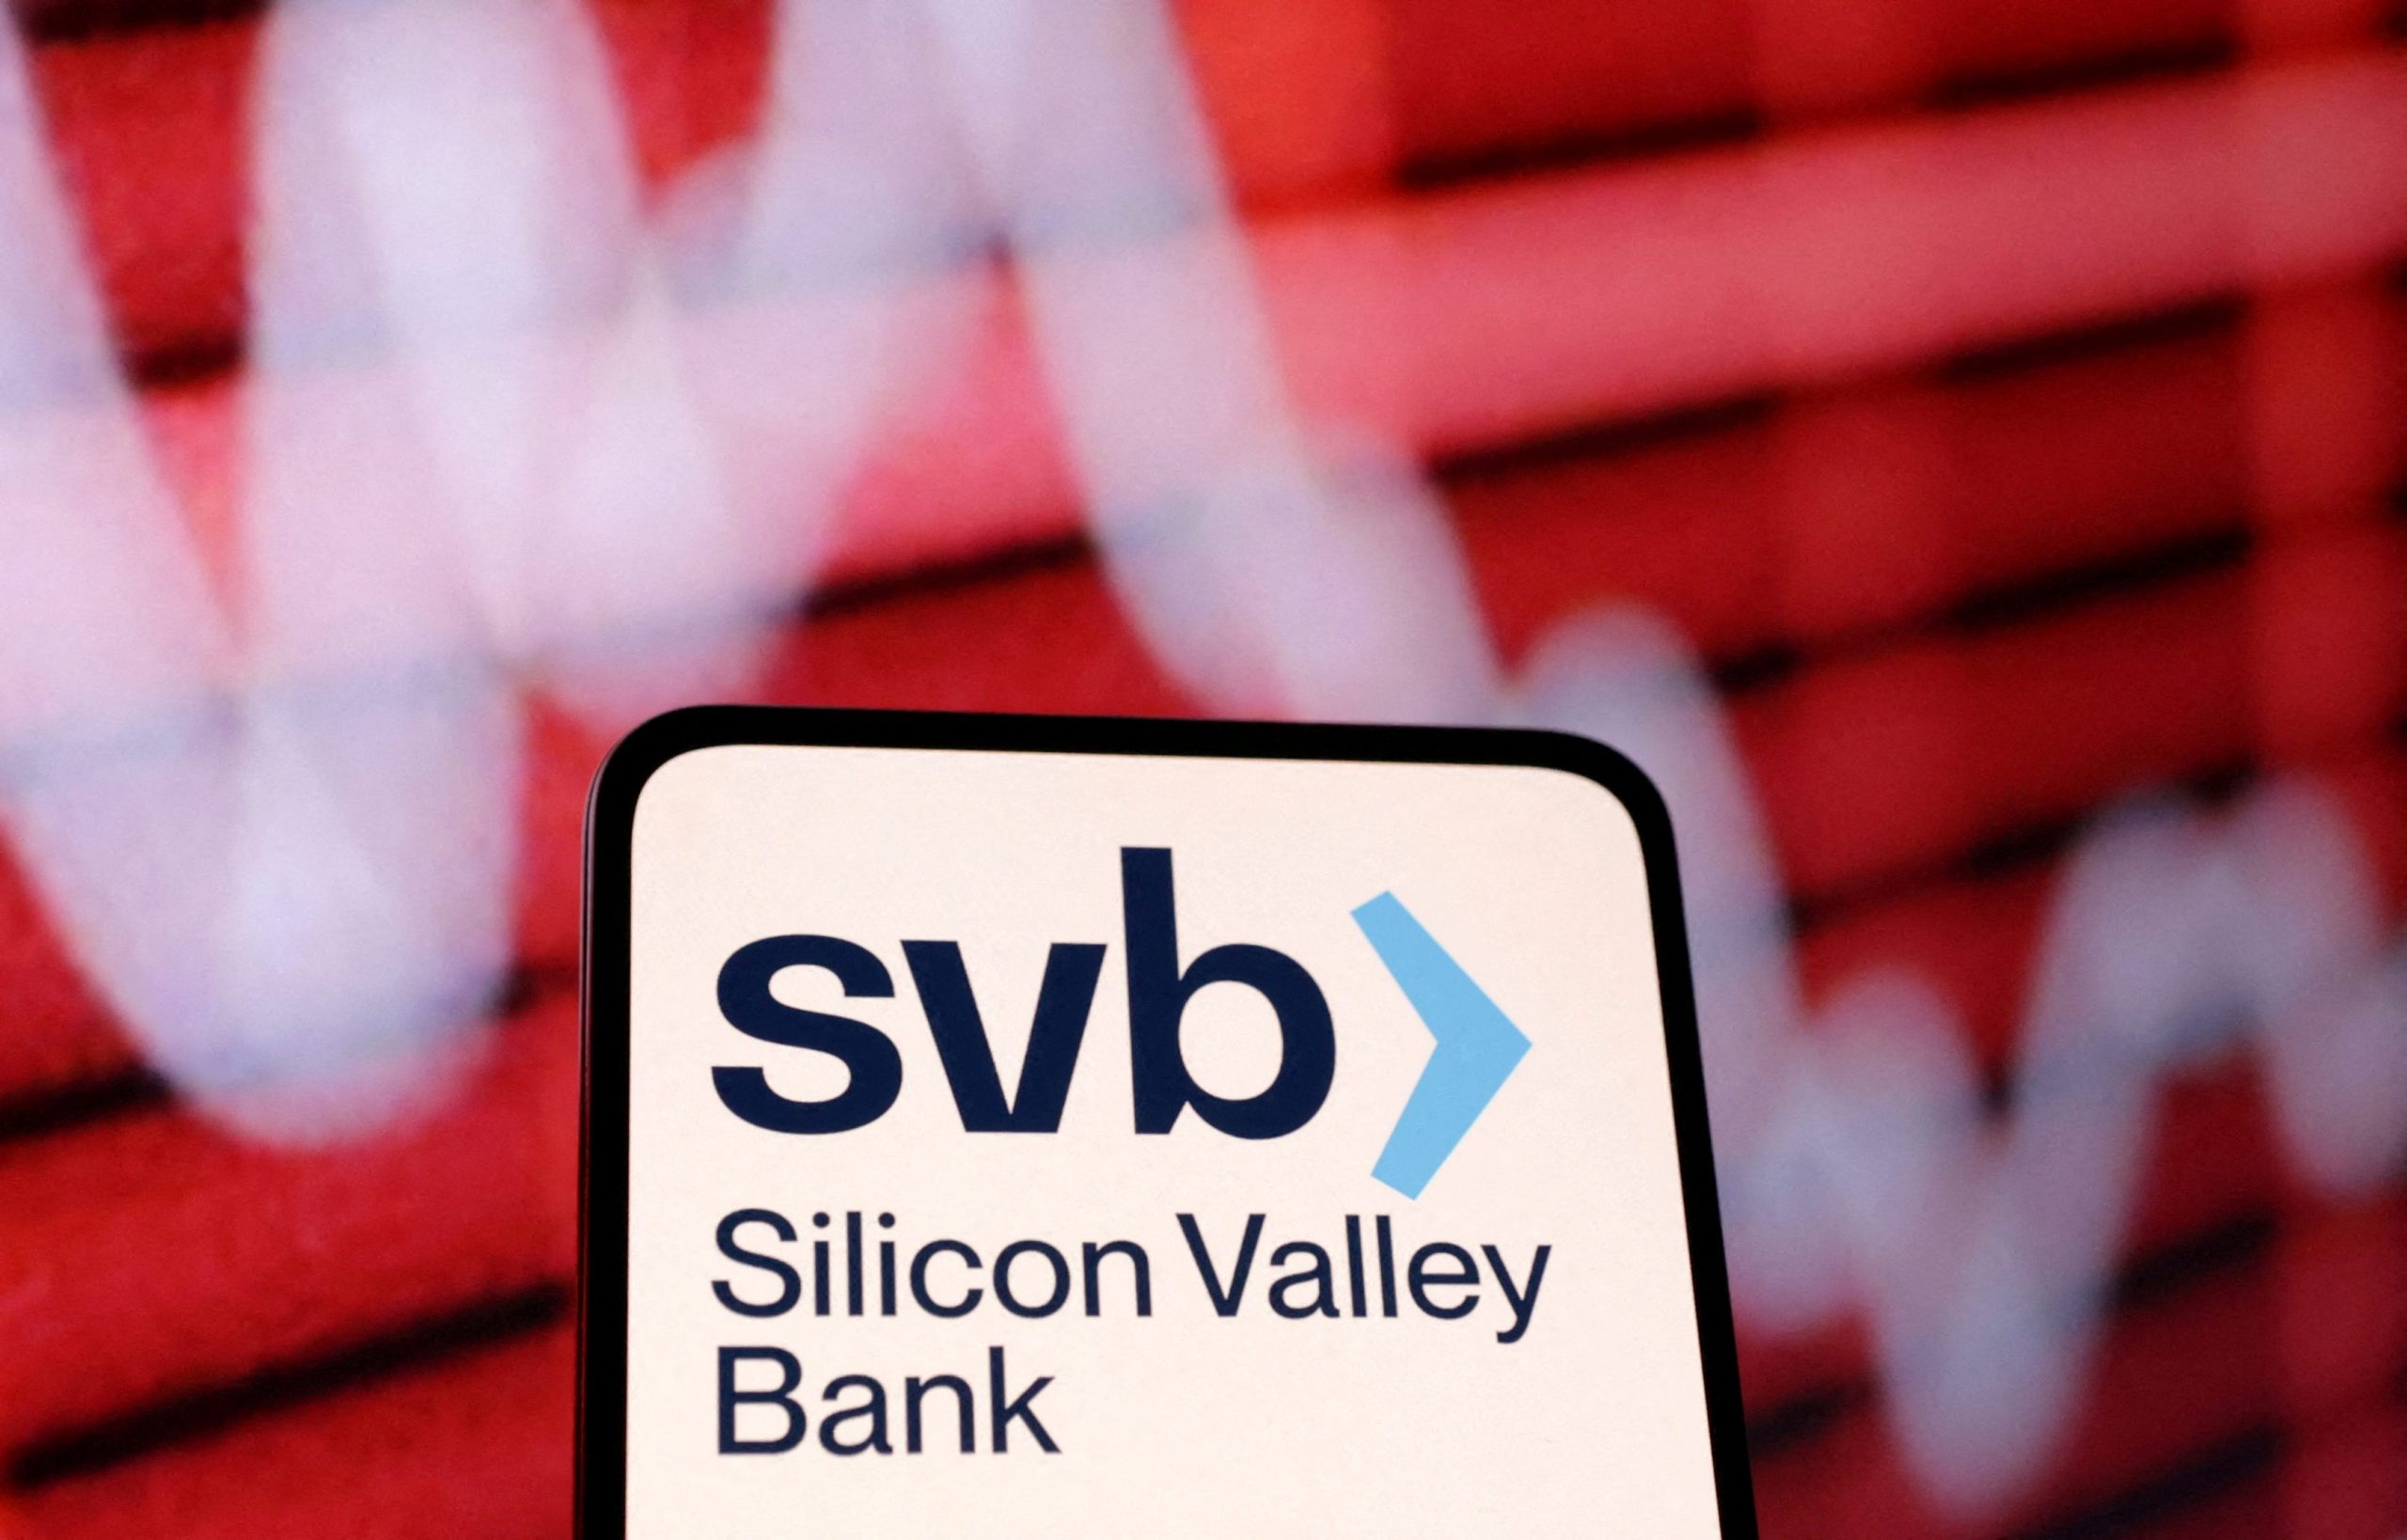 Kolapsi i bankave Silicon Valley ‘paralajmëron’ krizën financiare globale